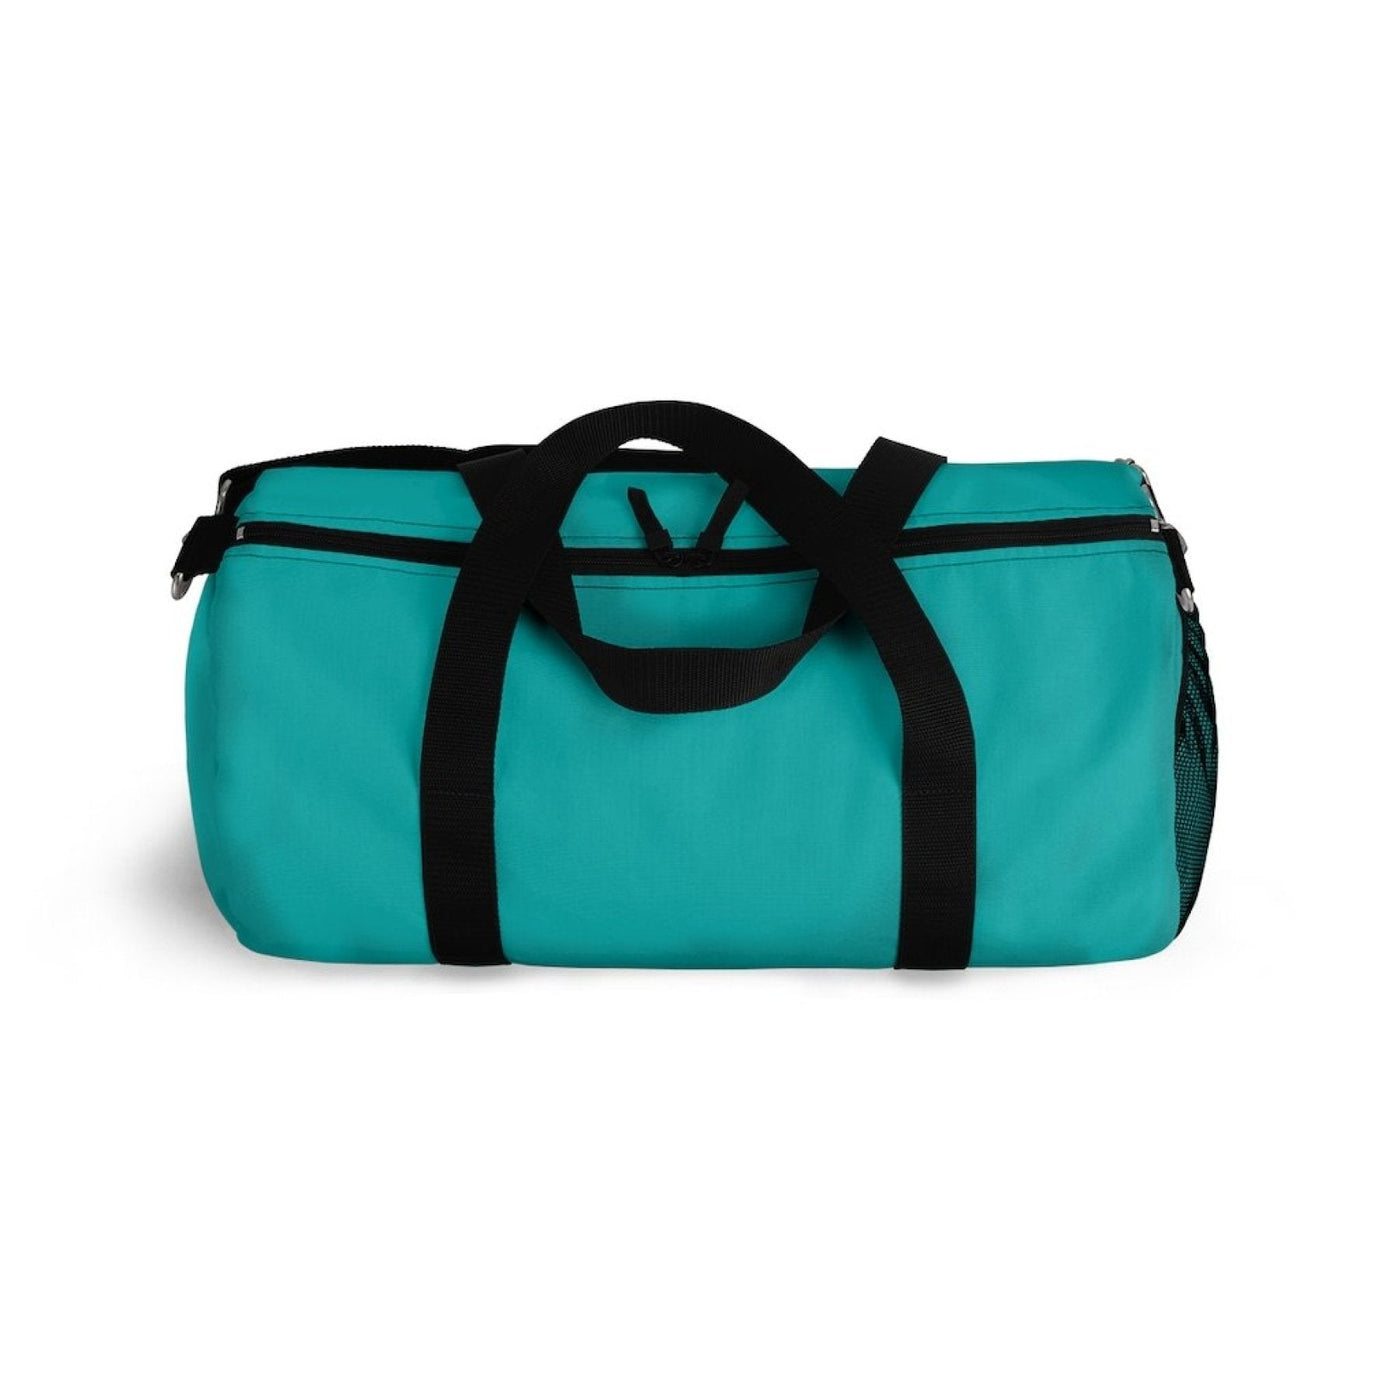 Duffel Bag Carry On Luggage Teal Green - Bags | Duffel Bags